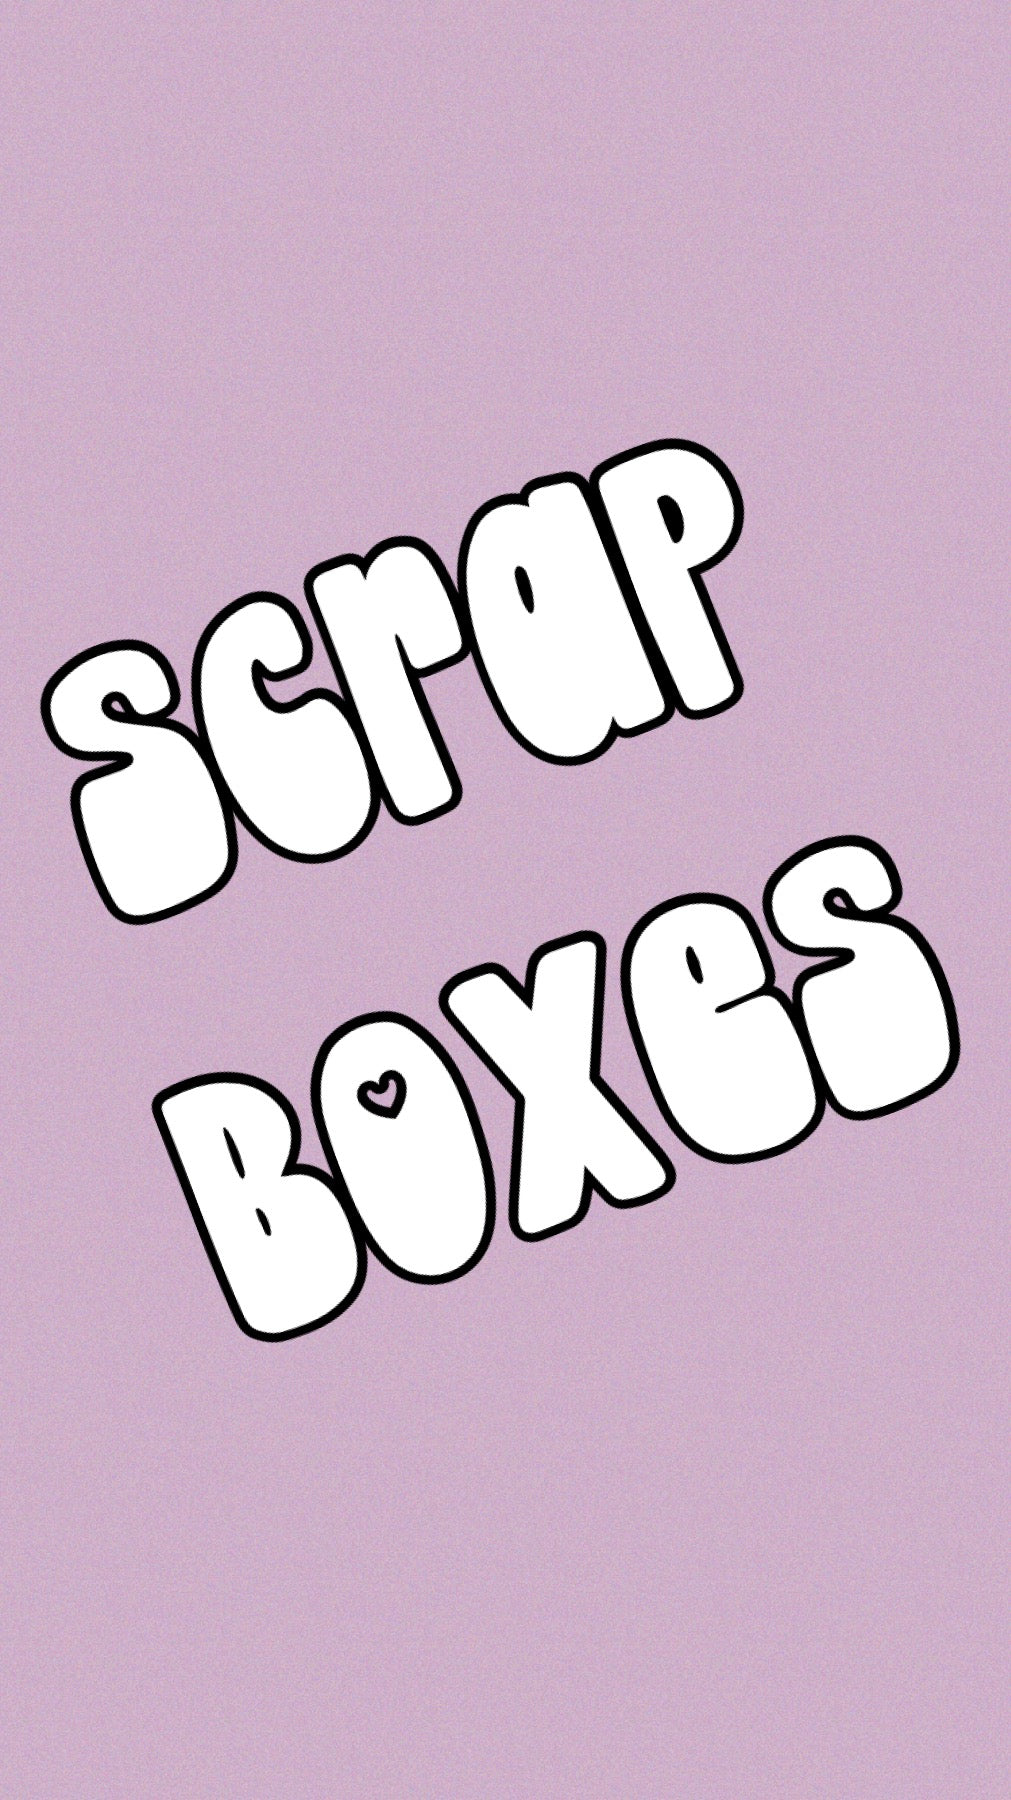 Scrap boxes!